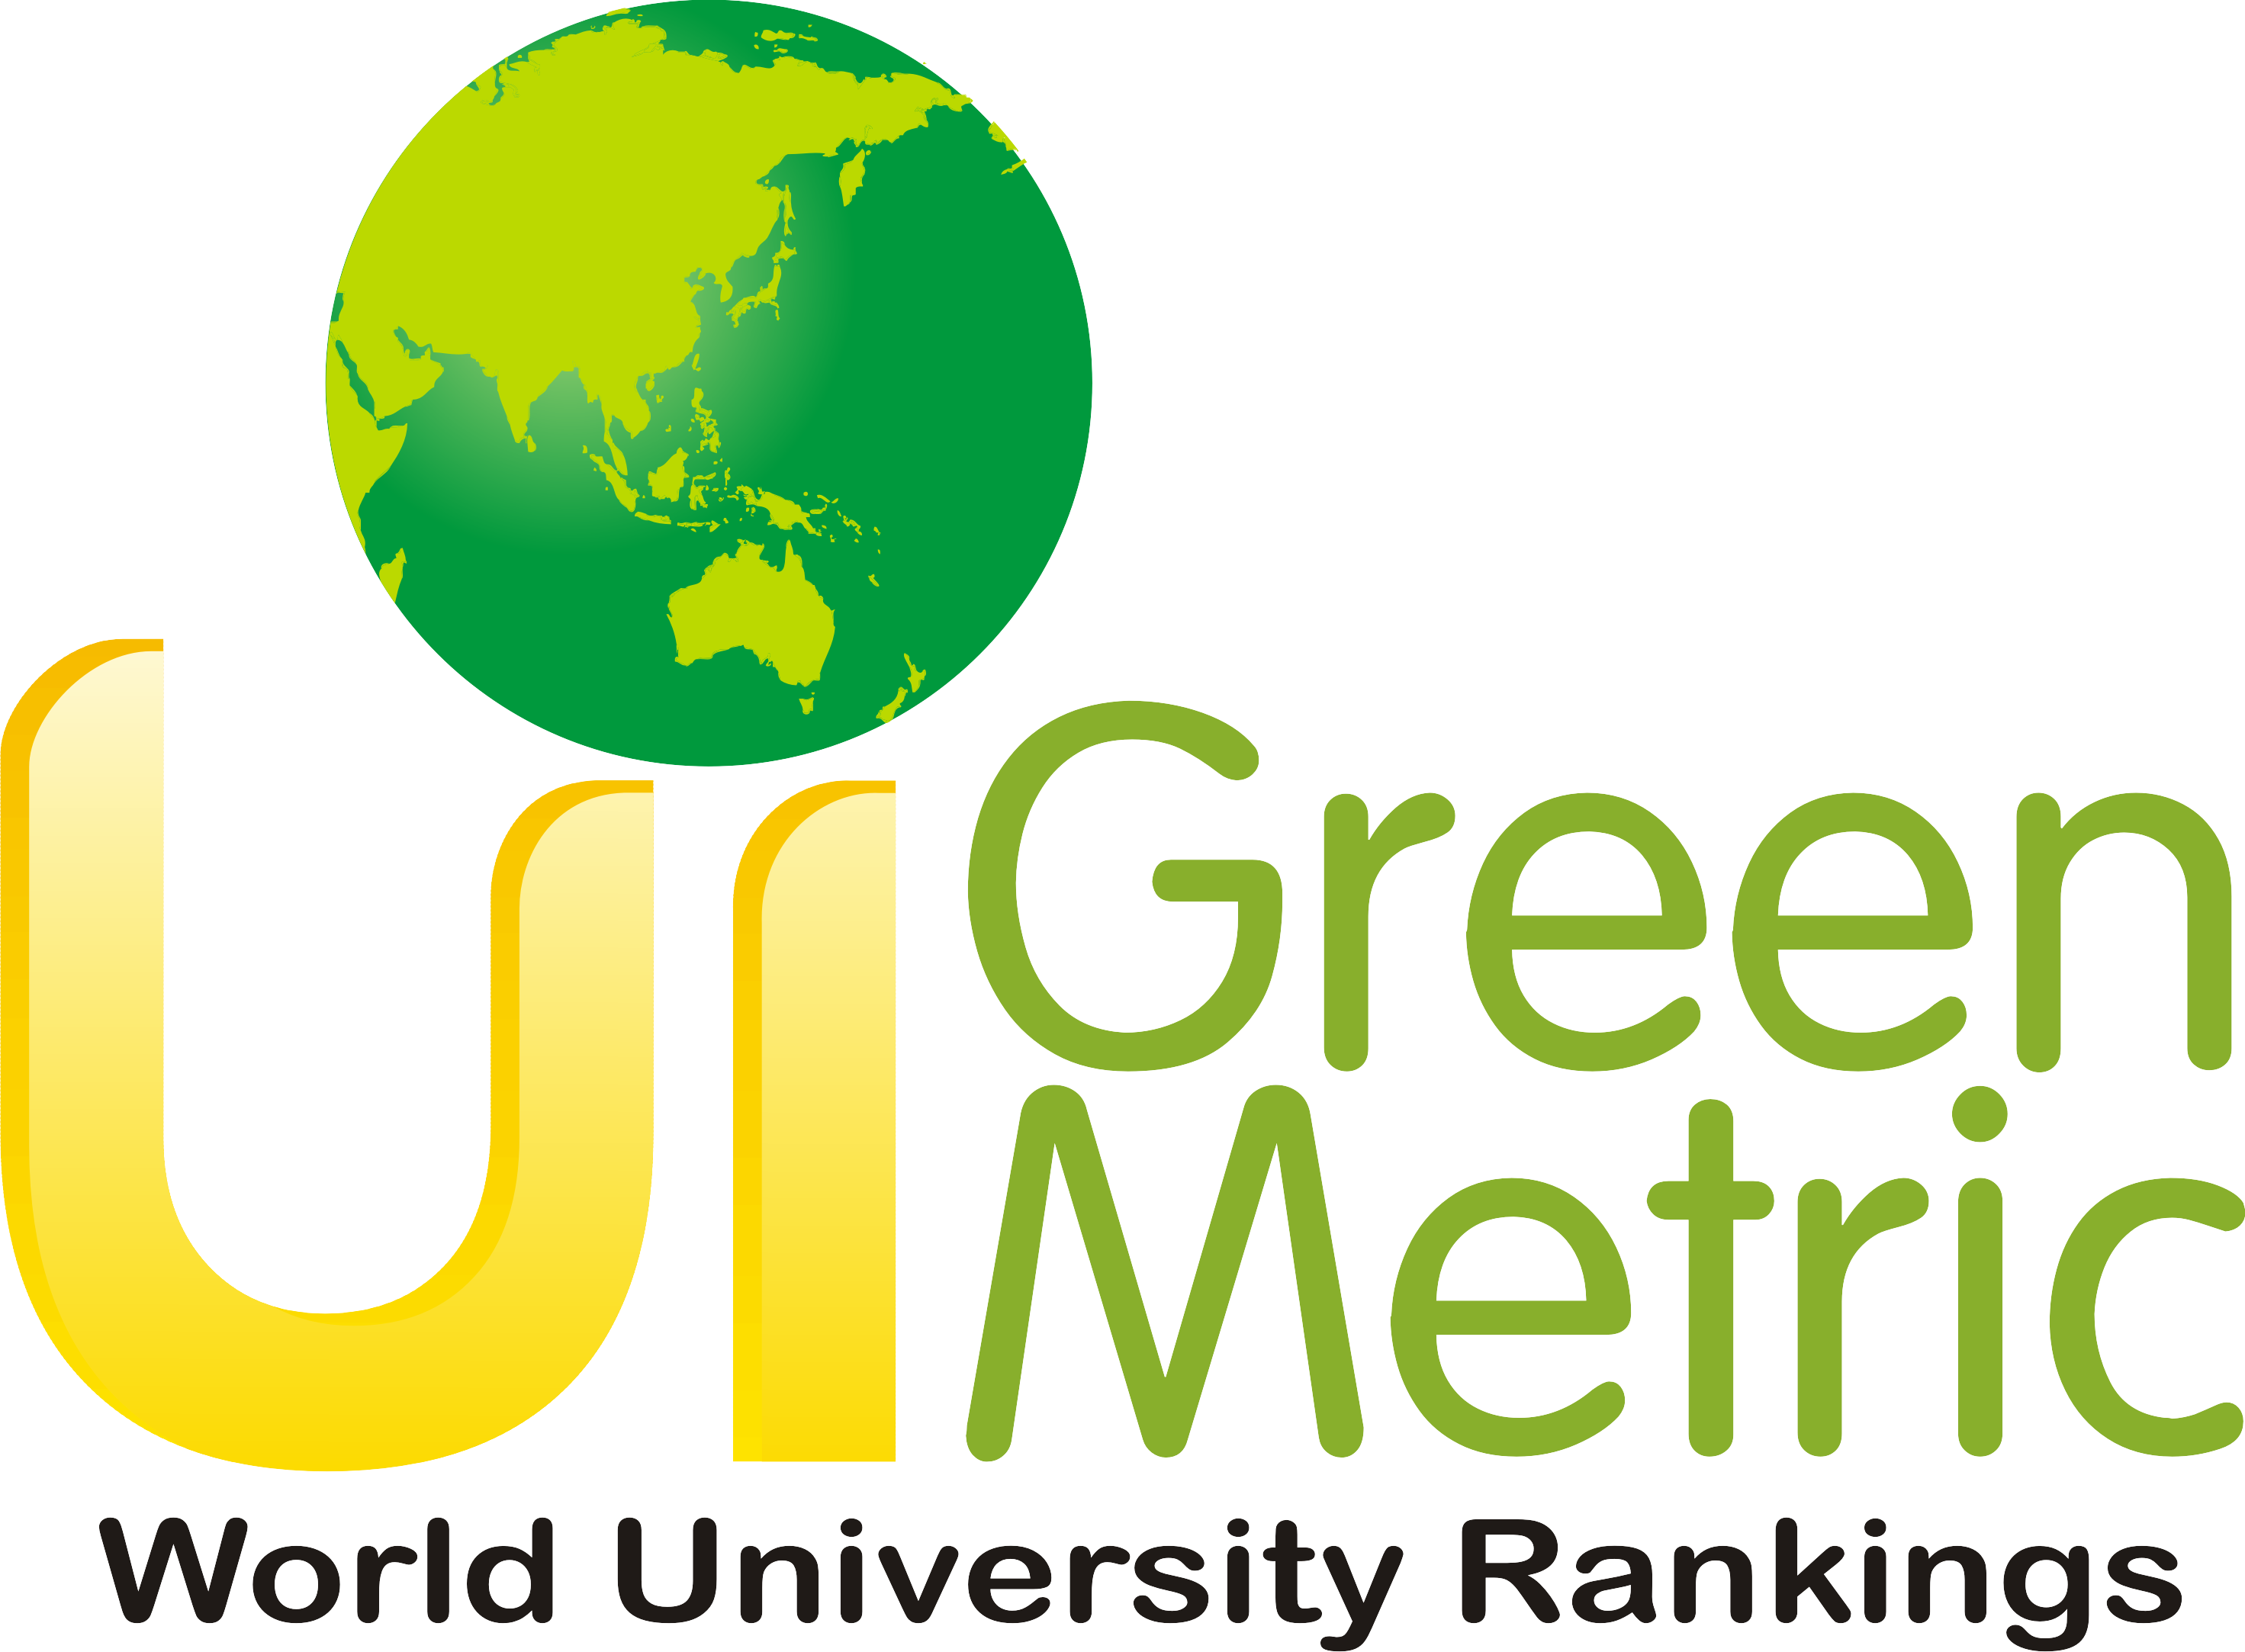 UI GreenMetric World University Rankings